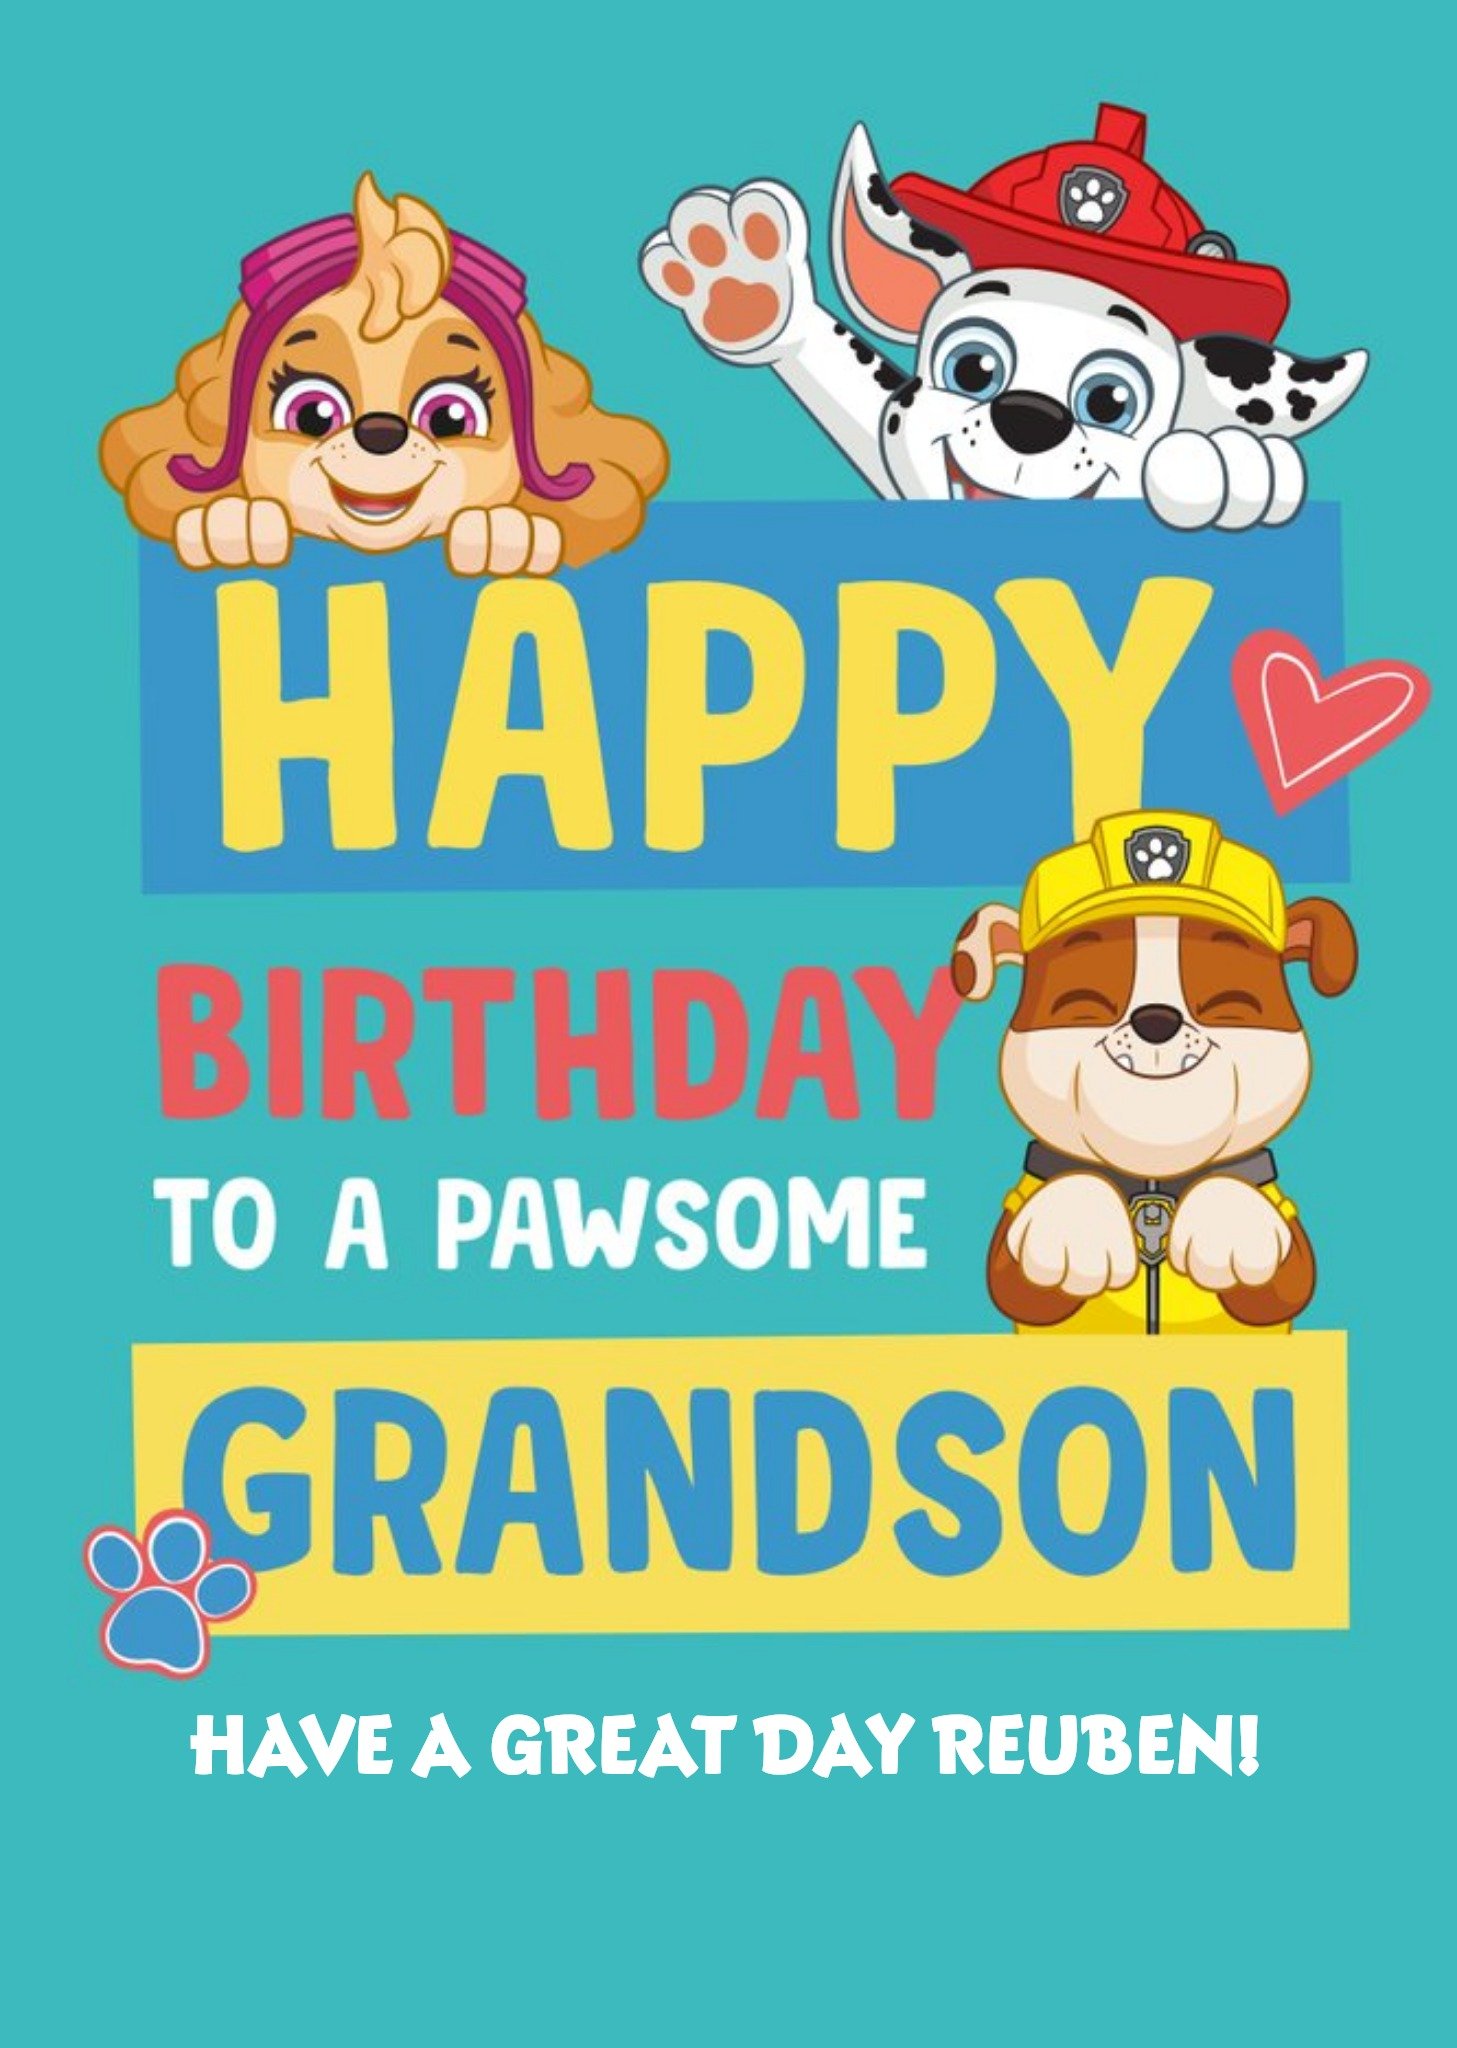 Nickelodeon Paw Patrol Pawsome Grandson Birthday Card Ecard